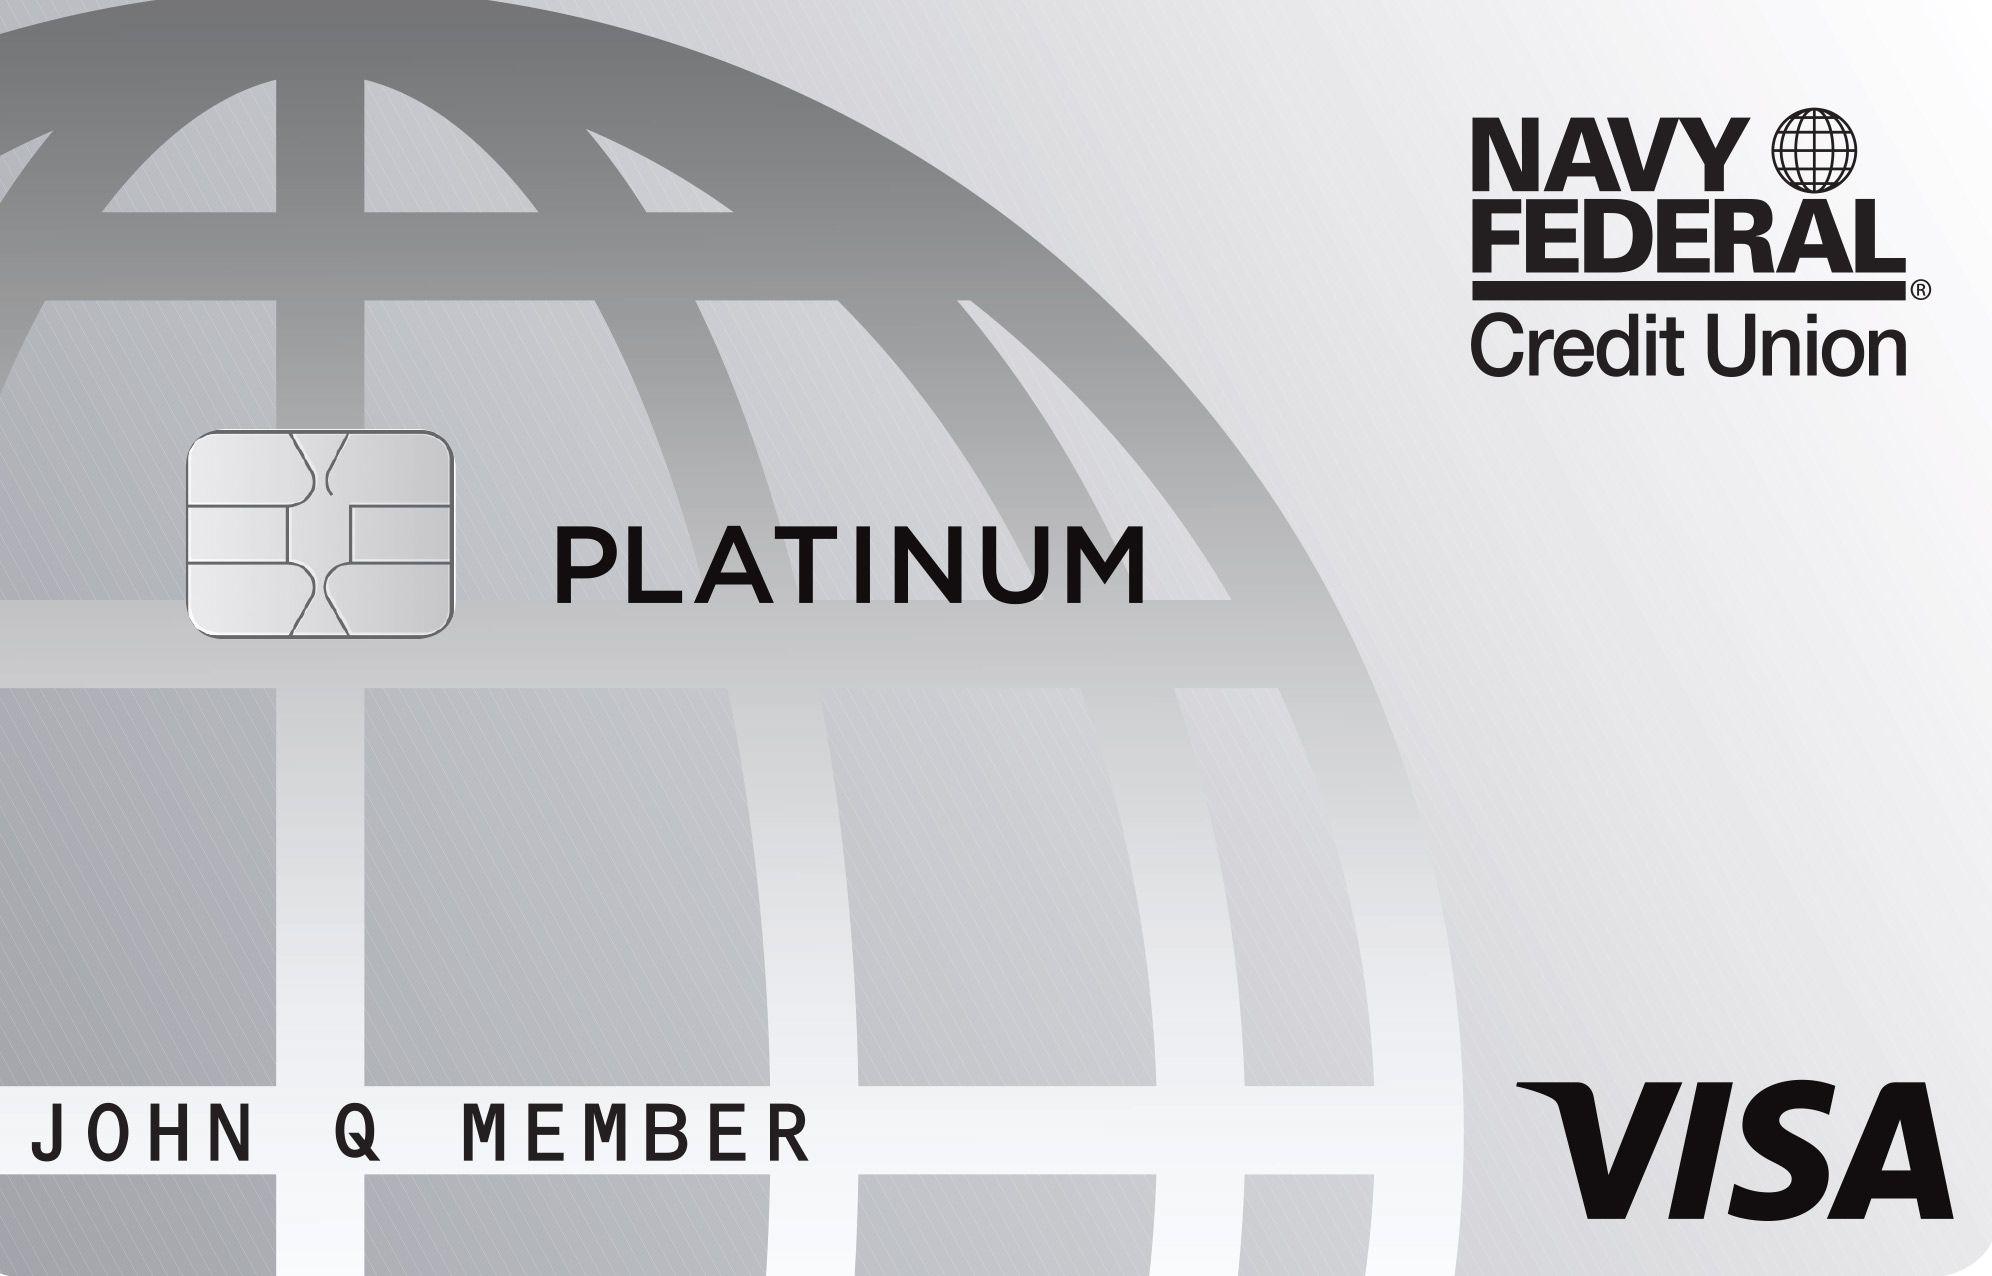 Nfcu Logo - Platinum Credit Card - Mastercard or Visa | Navy Federal Credit Union